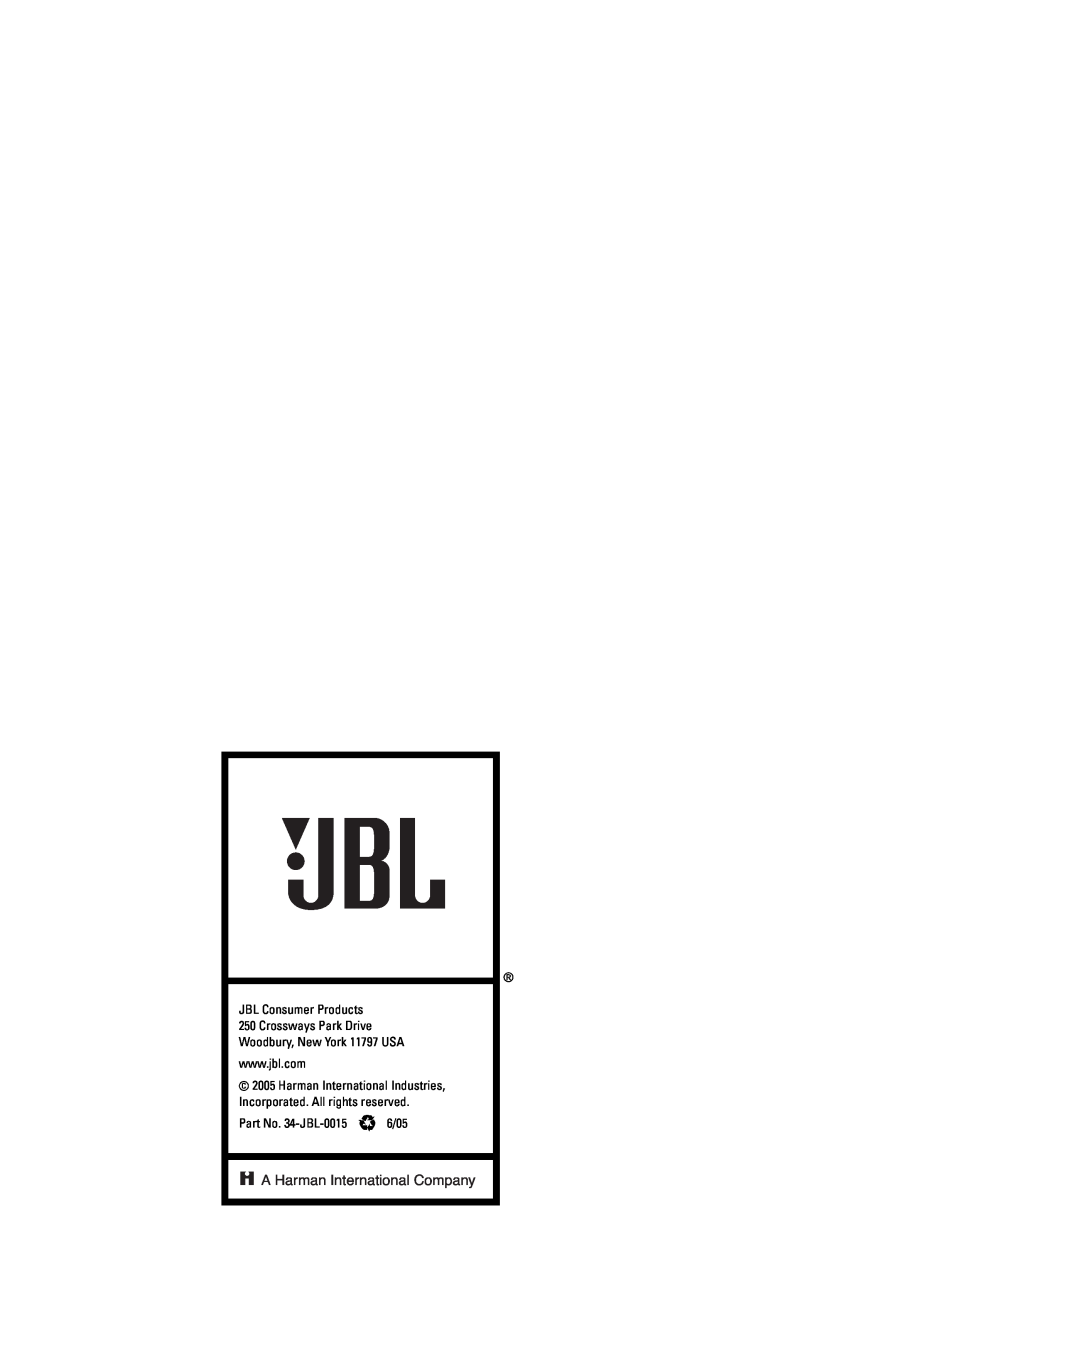 JBL AVA7 manual A Harman International Company, JBL Consumer Products 250 Crossways Park Drive, Part No. 34-JBL-0015, 6/05 